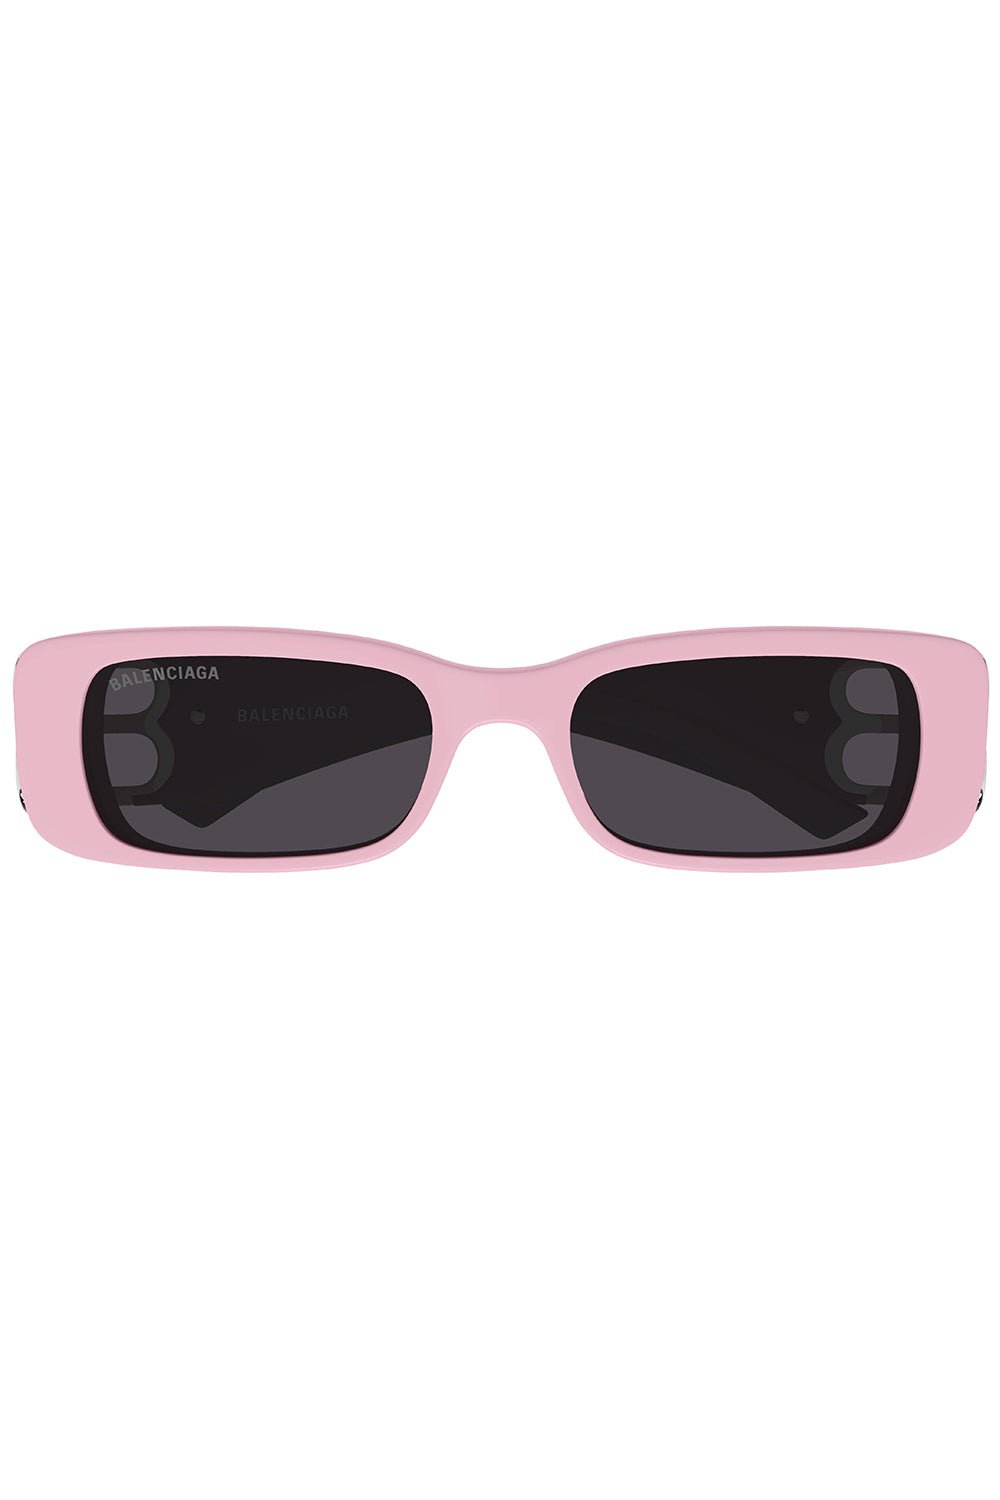 BALENCIAGA-Dynasty Rectangular Sunglasses-PINK/GRY